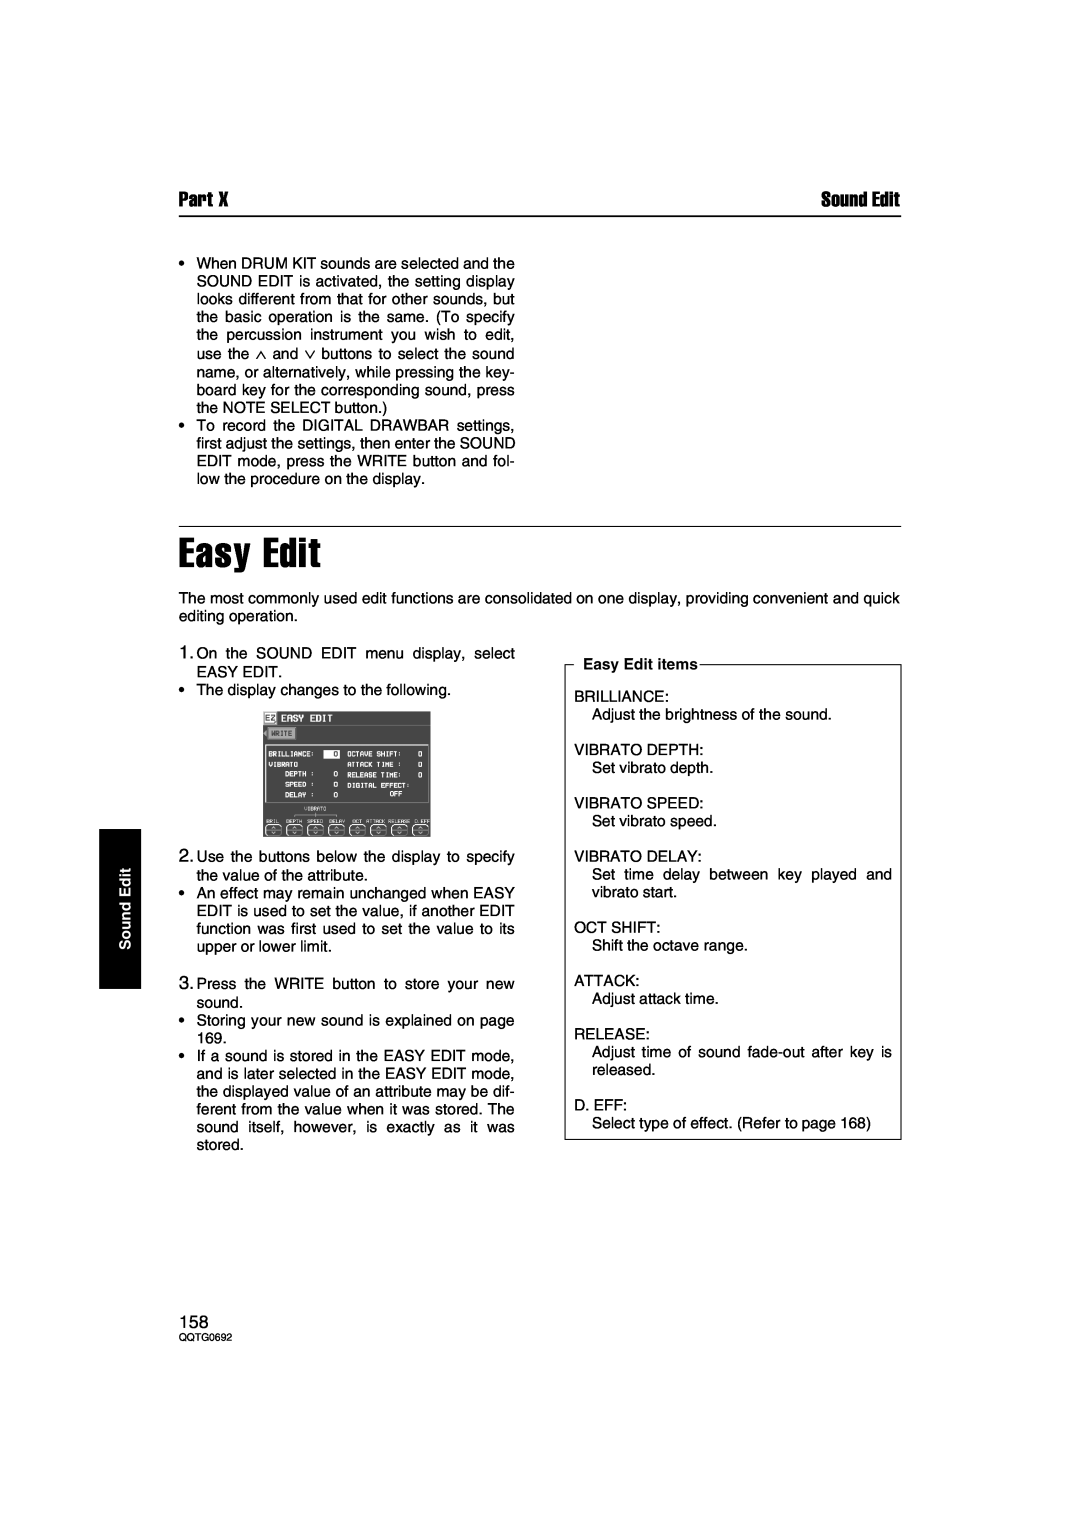 Panasonic SX-KN2600, SX-KN2400 manual Sound Edit, Easy Edit items, Part 